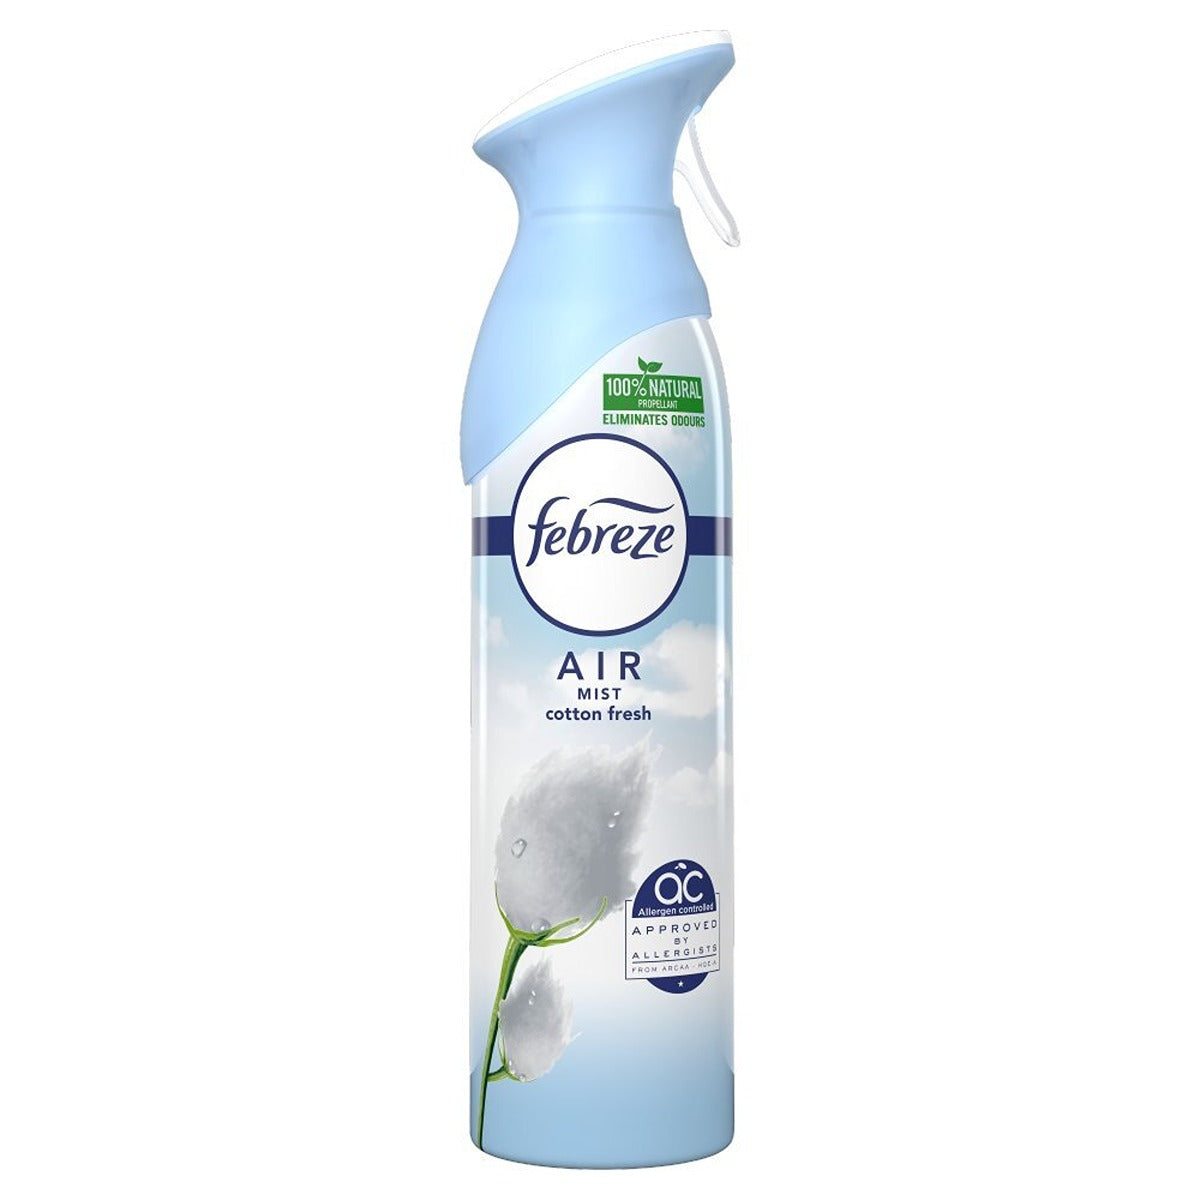 A bottle of Febreze Air Mist Cotton Fresh Air Freshener Spray - 300ml on a white background.